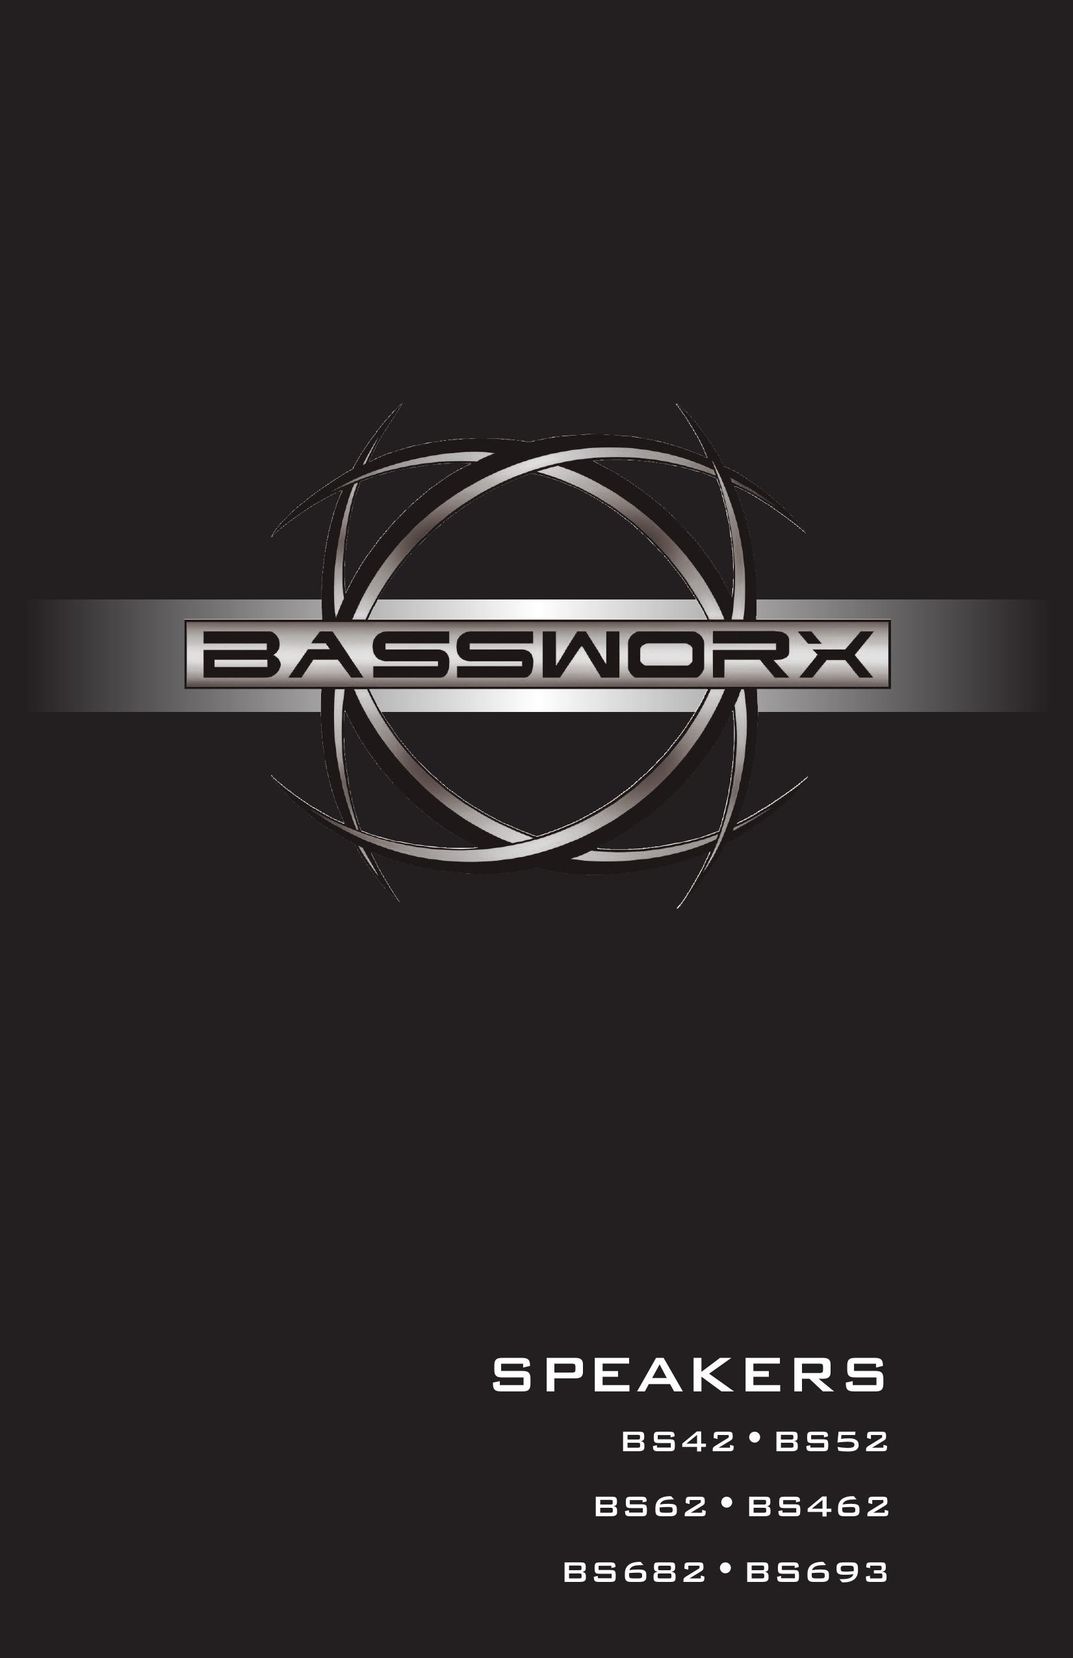 Bassworx BS462 Car Speaker User Manual